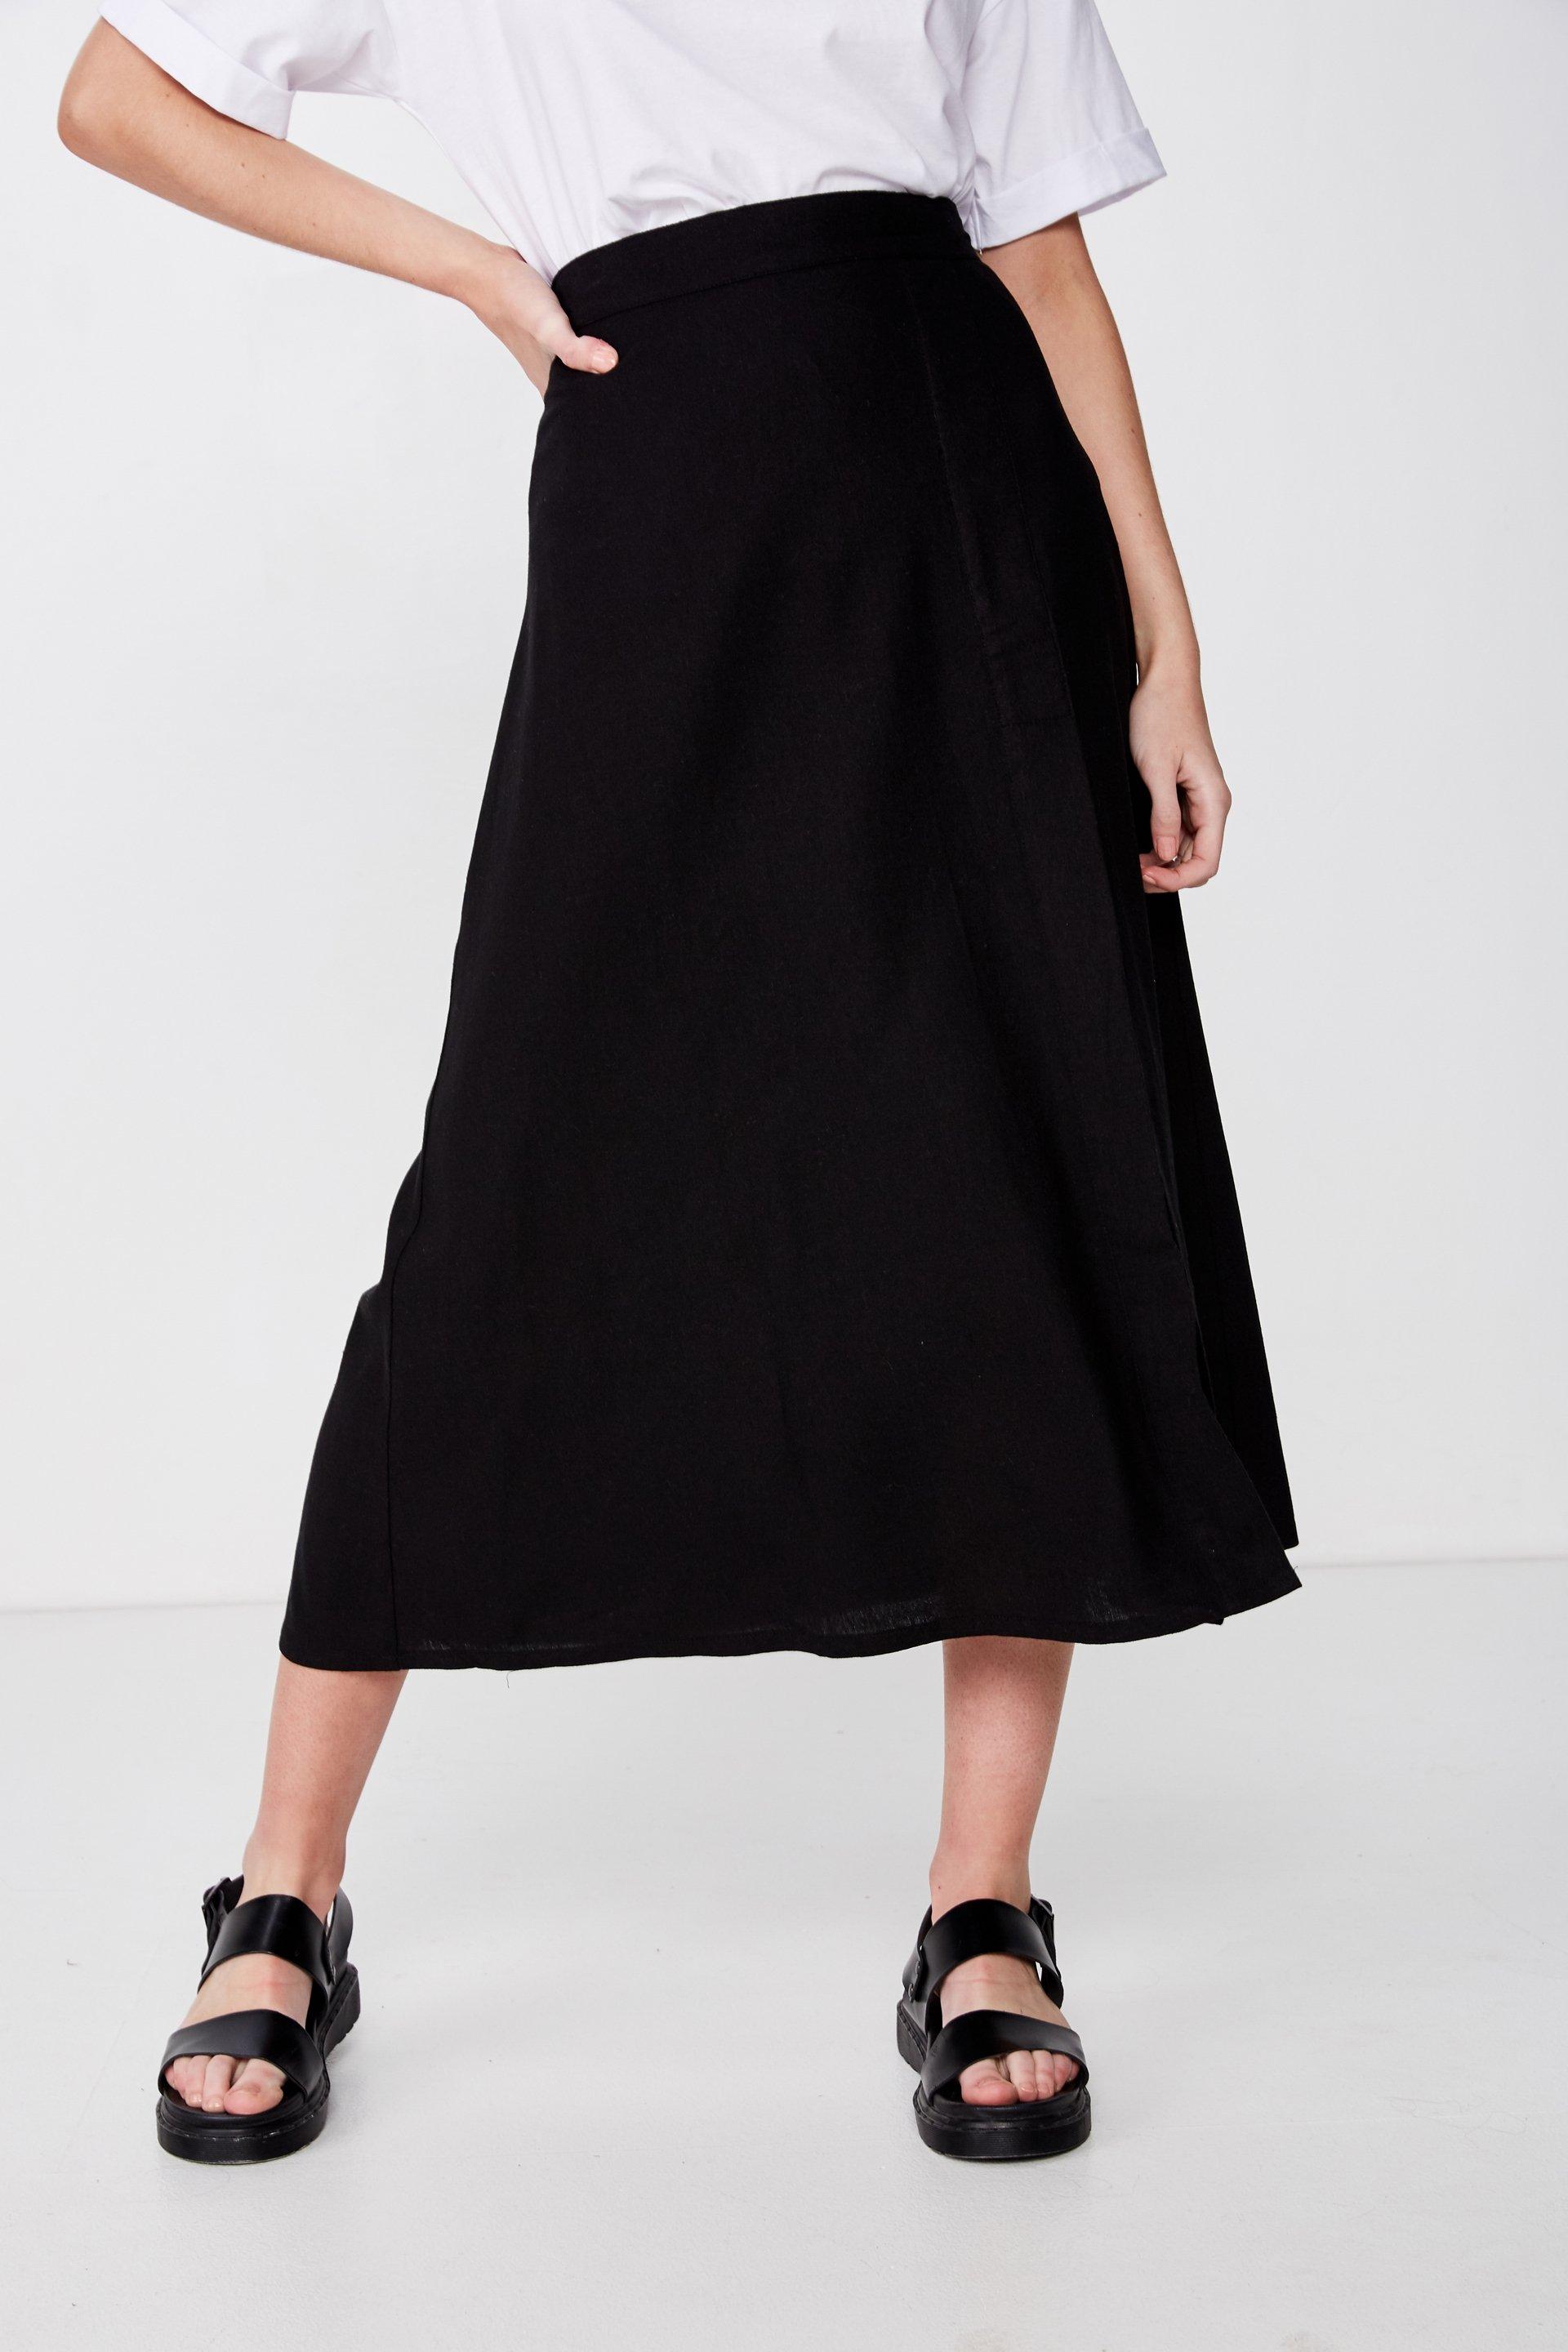 Woven Whitney midi skirt - black Cotton On Skirts | Superbalist.com